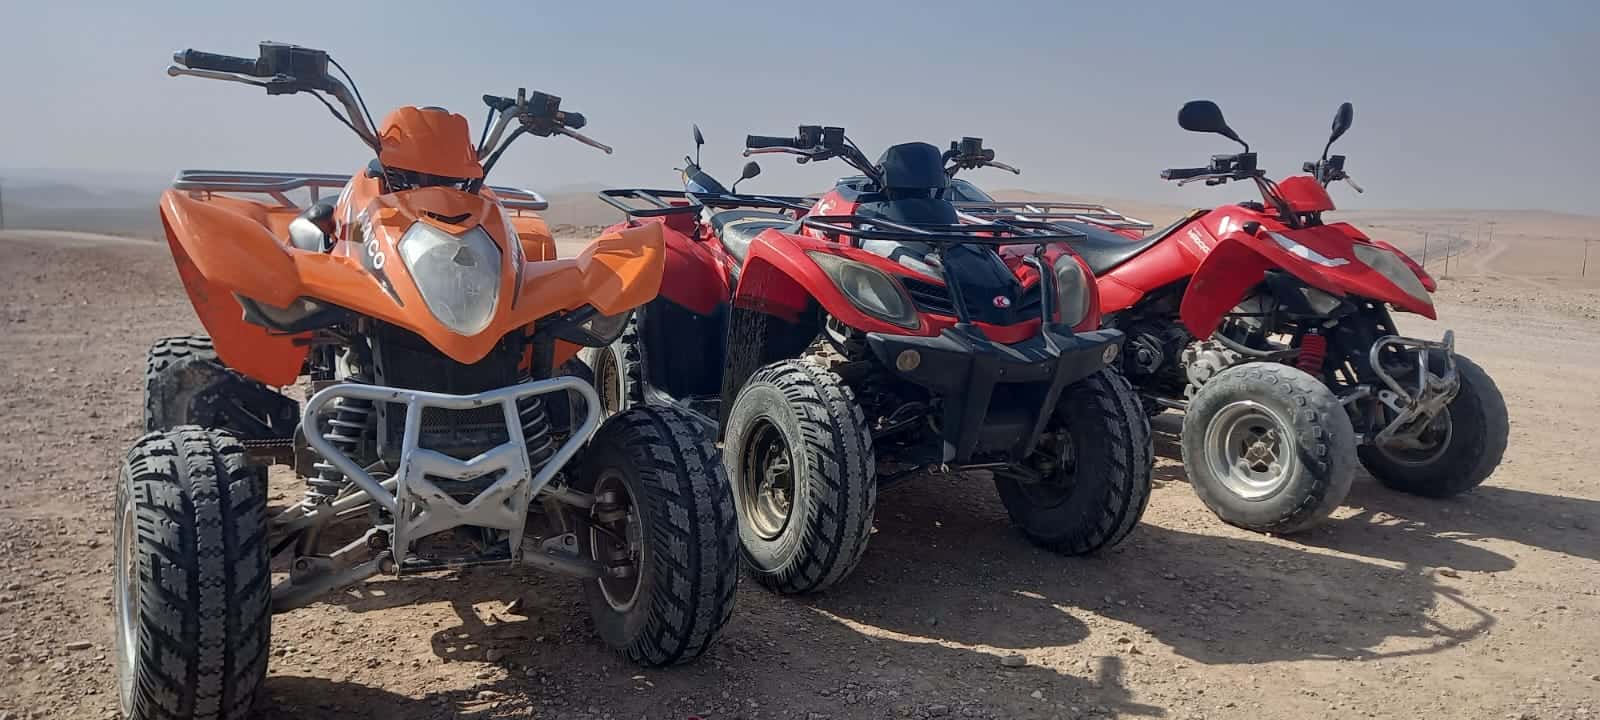 location moto Marrakech